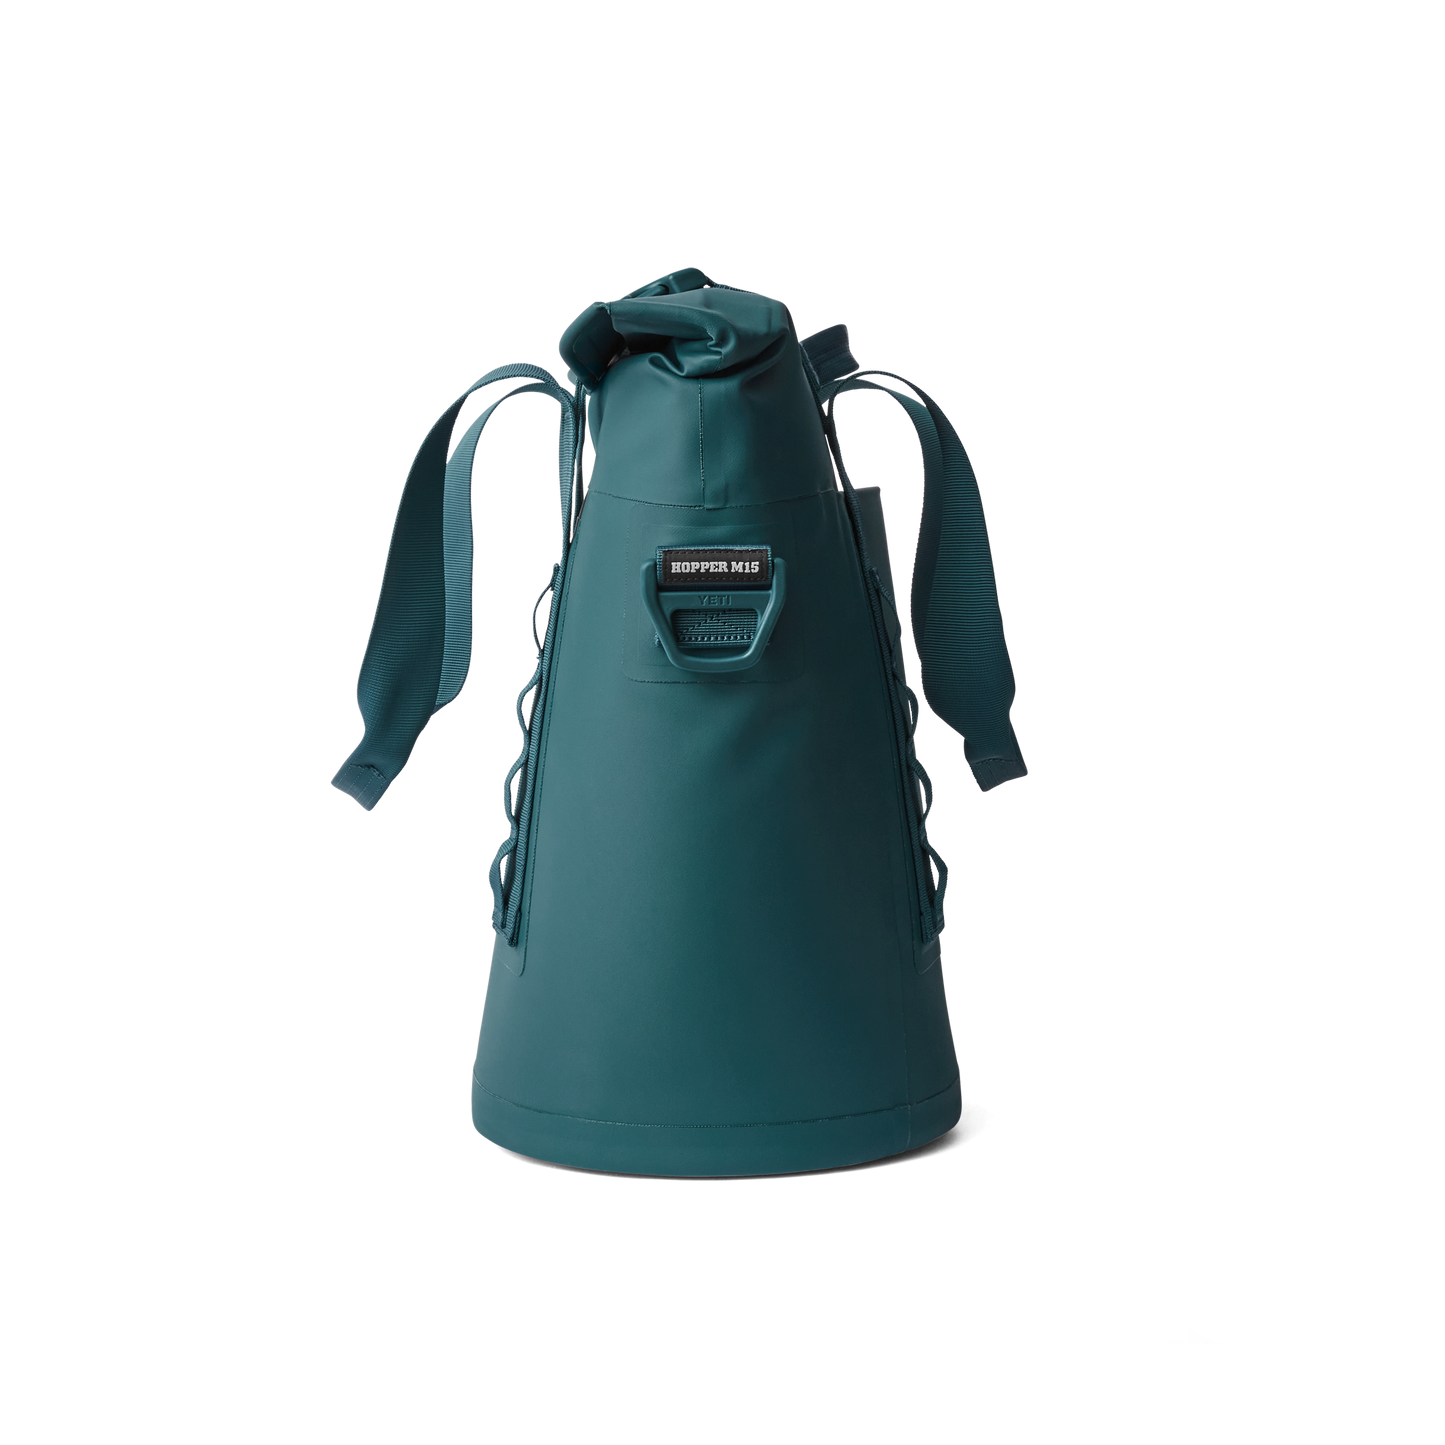 YETI Hopper® M15 Cool Bag Agave Teal